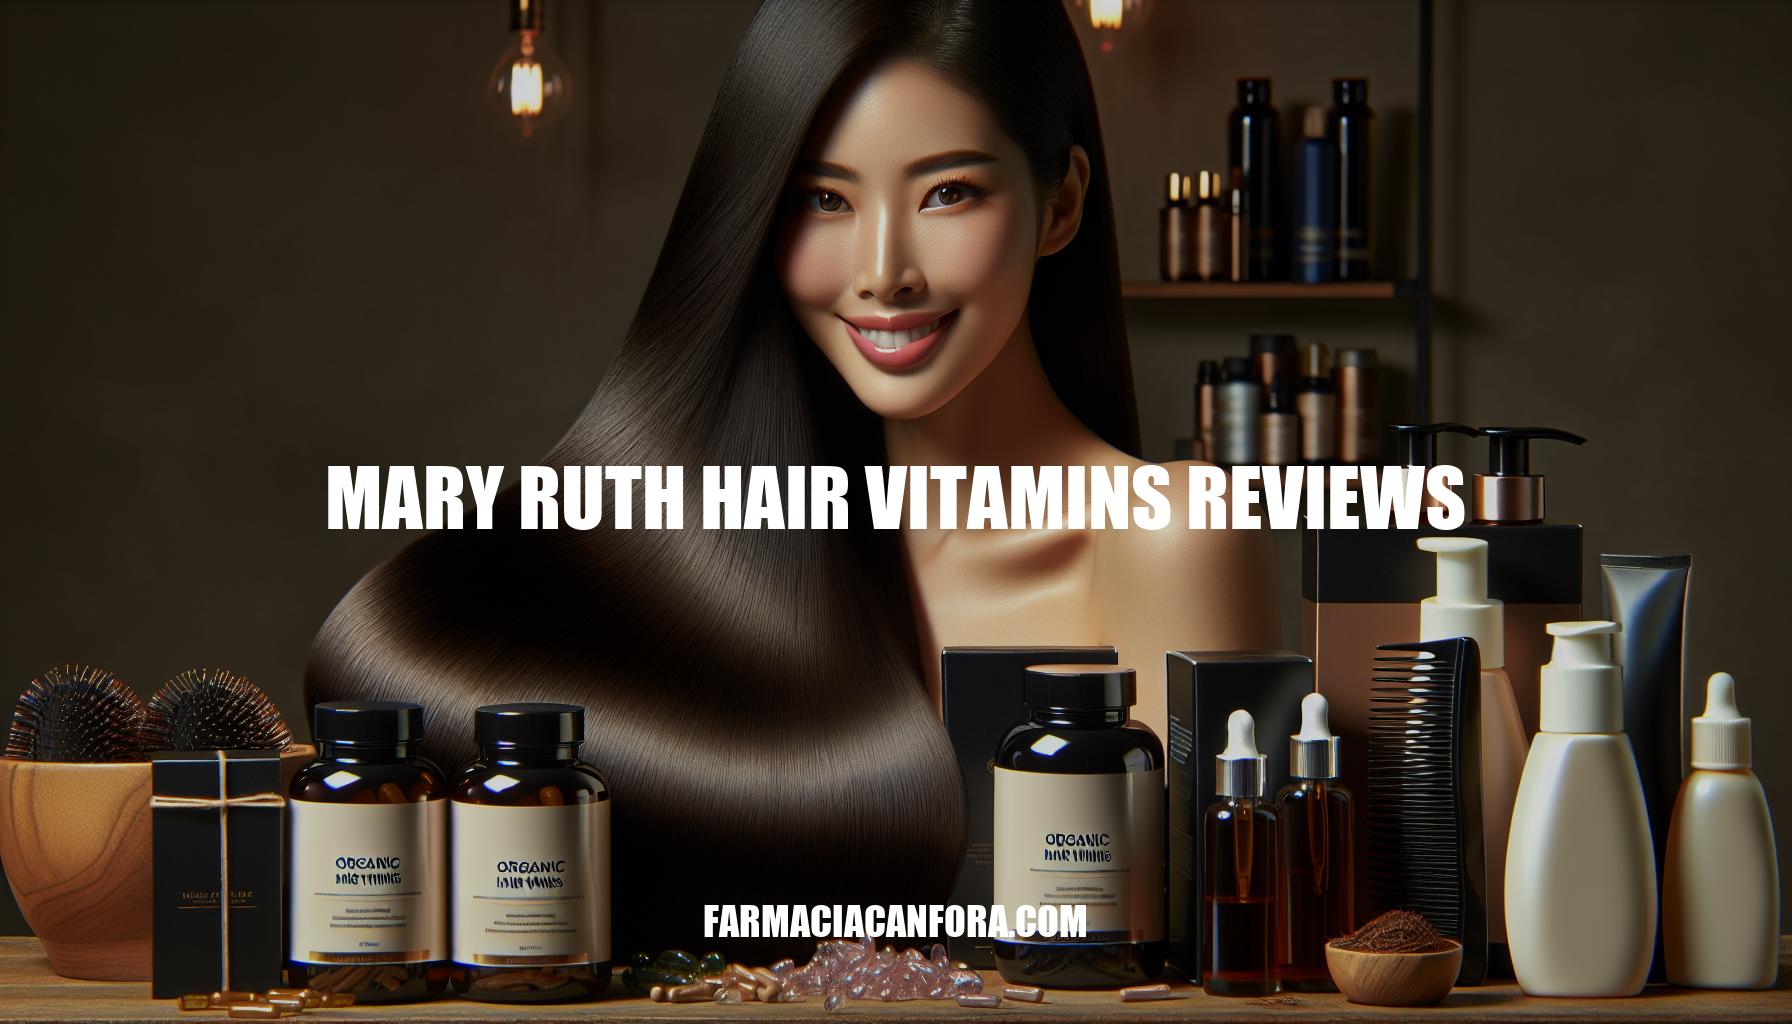 Mary Ruth Hair Vitamins Reviews: Unbiased Expert Analysis and Customer Feedback